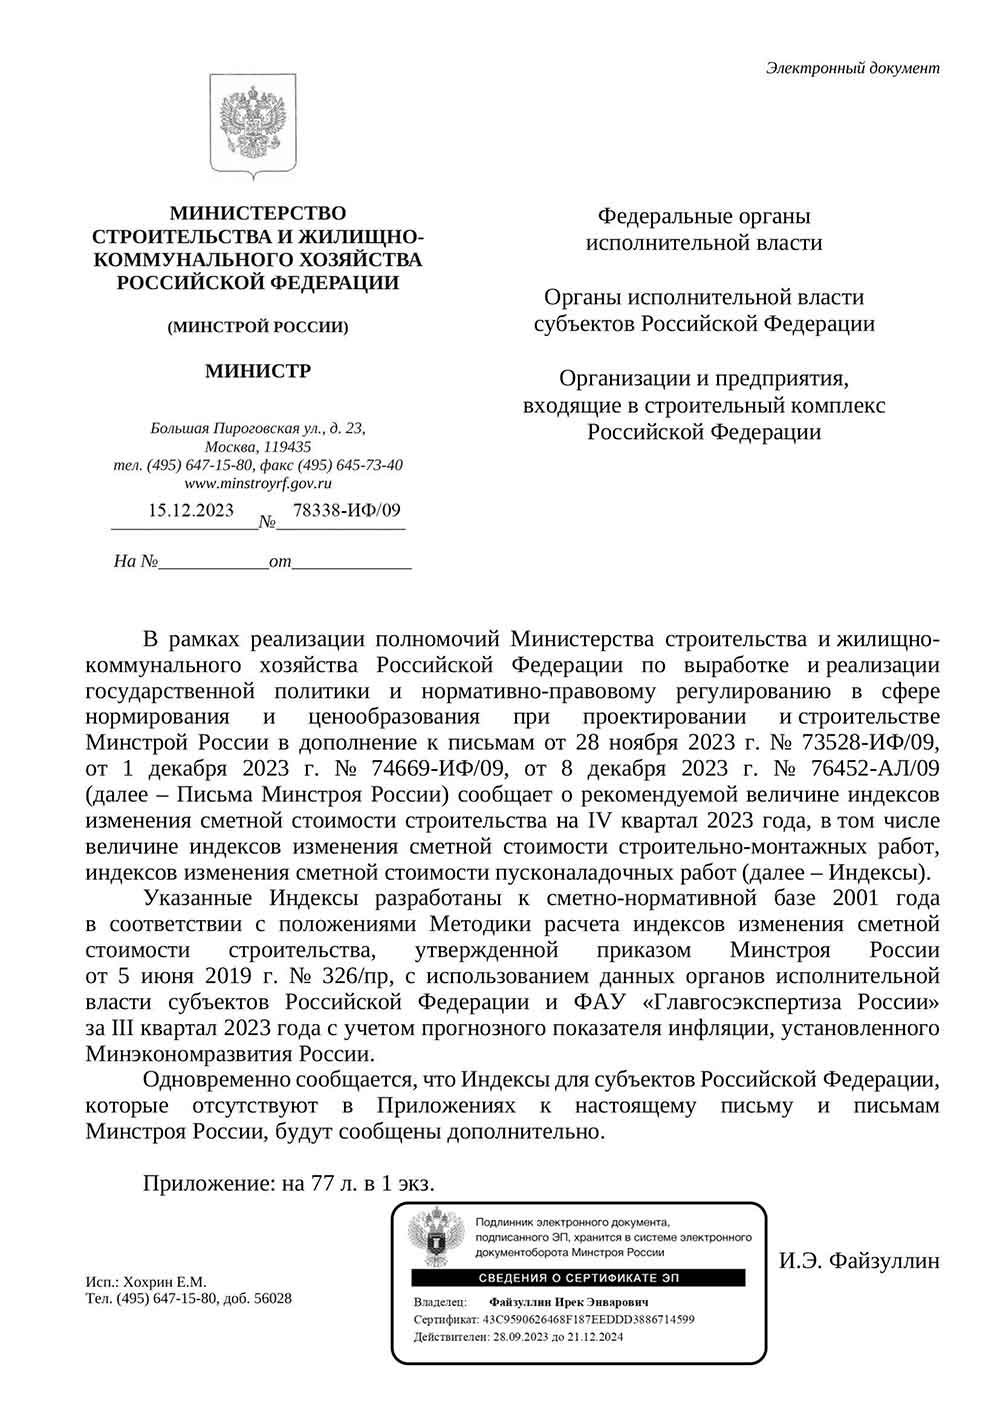 Письмо Минстроя РФ №78338-ИФ/09 от 15.12.2023 г.